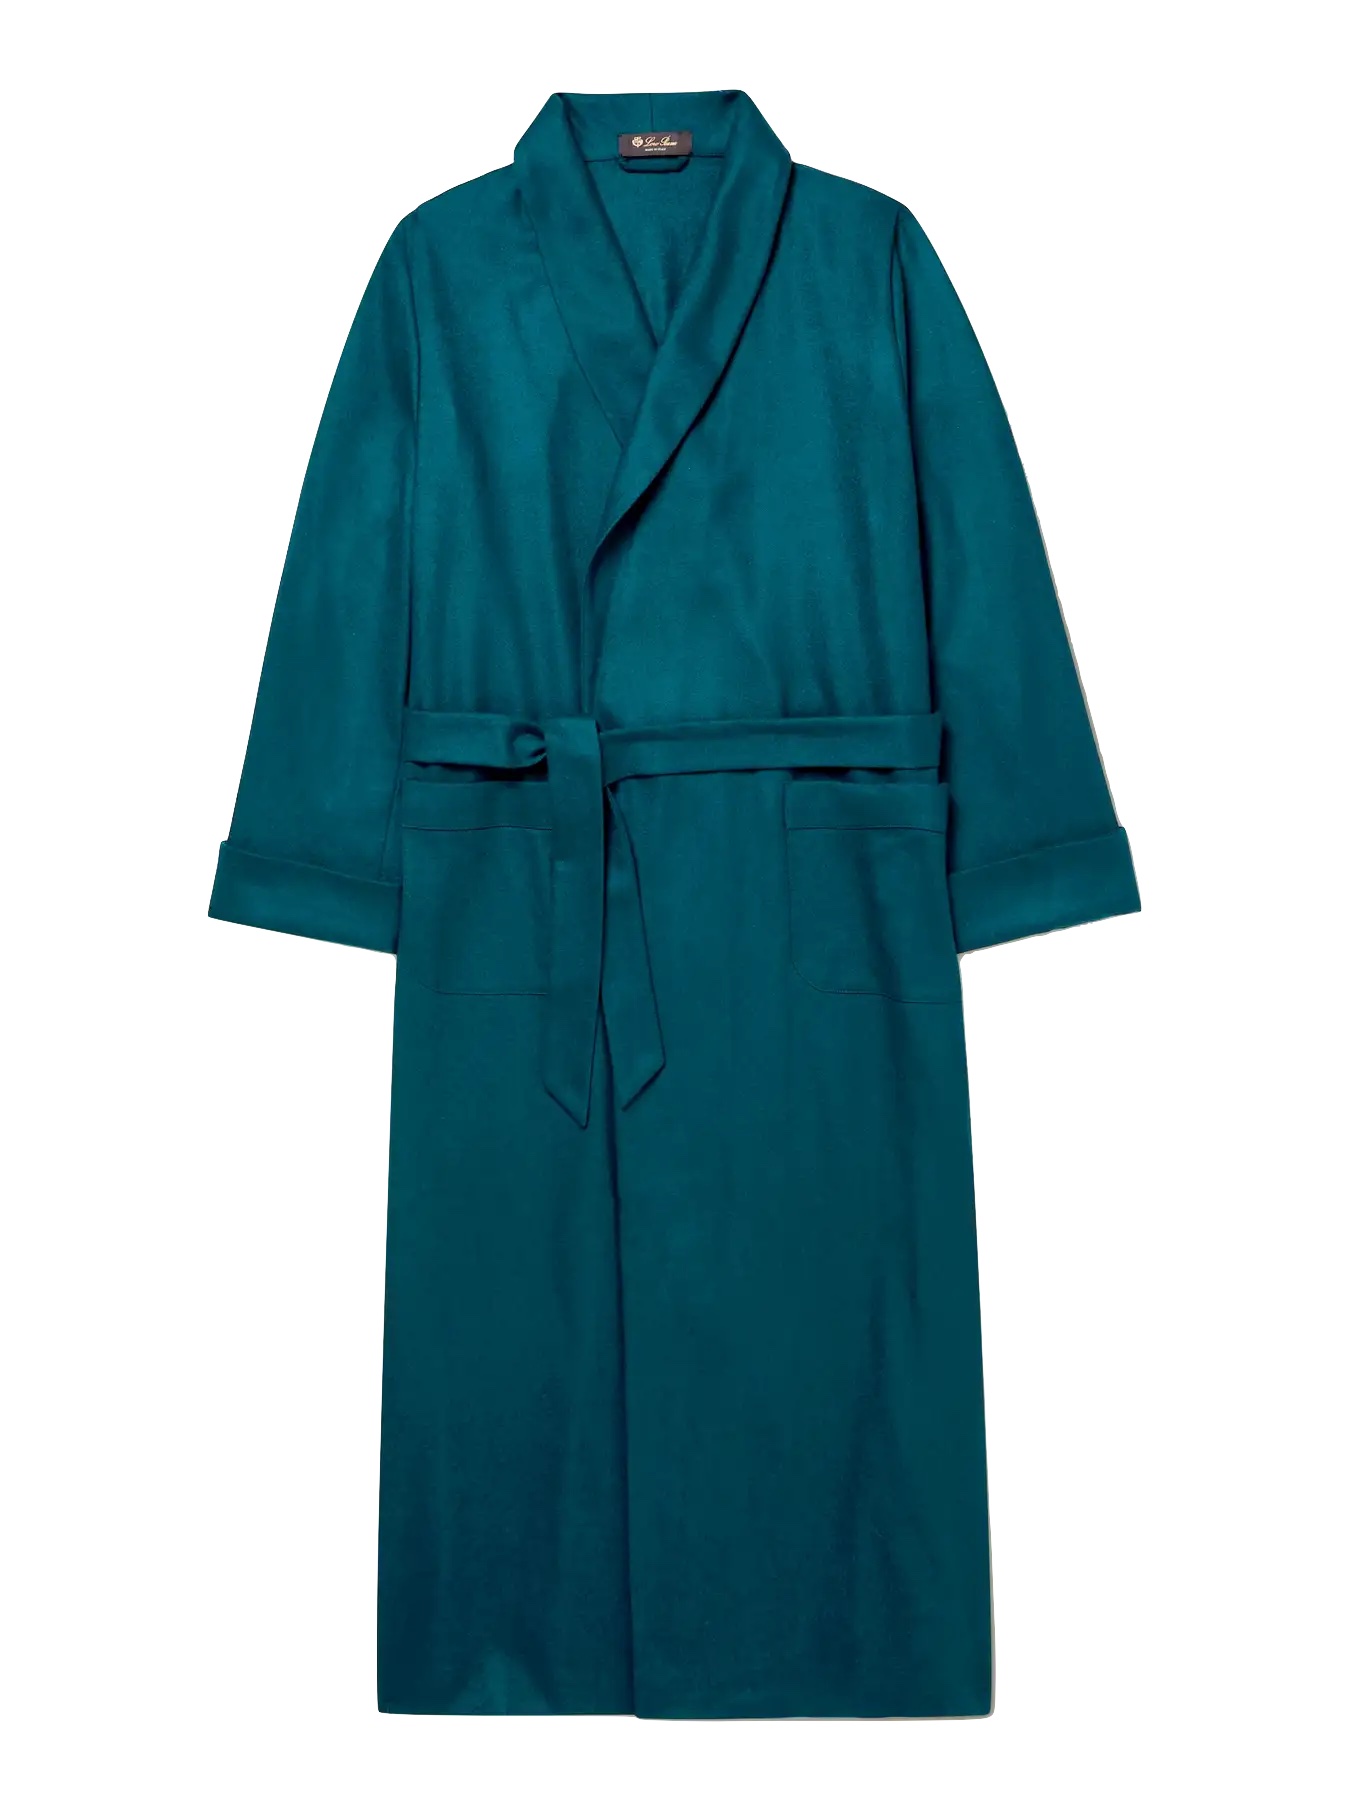 Men's robe